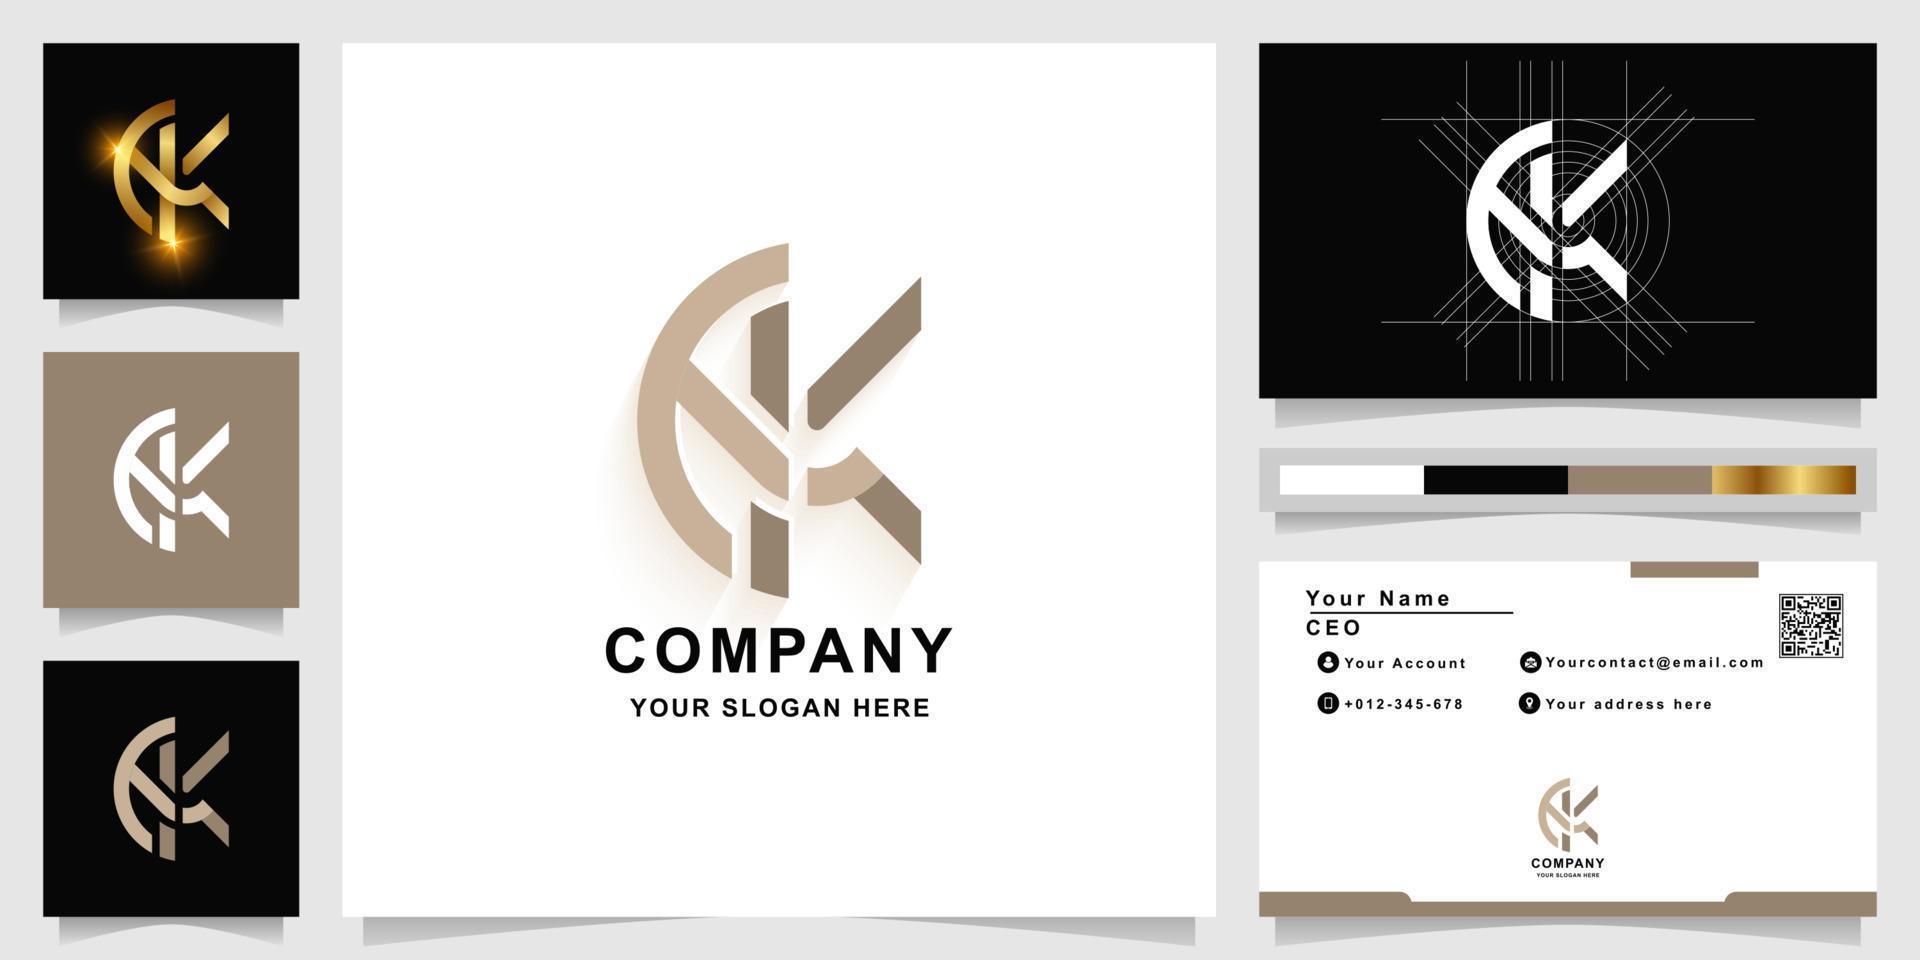 Letter EK or K monogram logo template with business card design vector